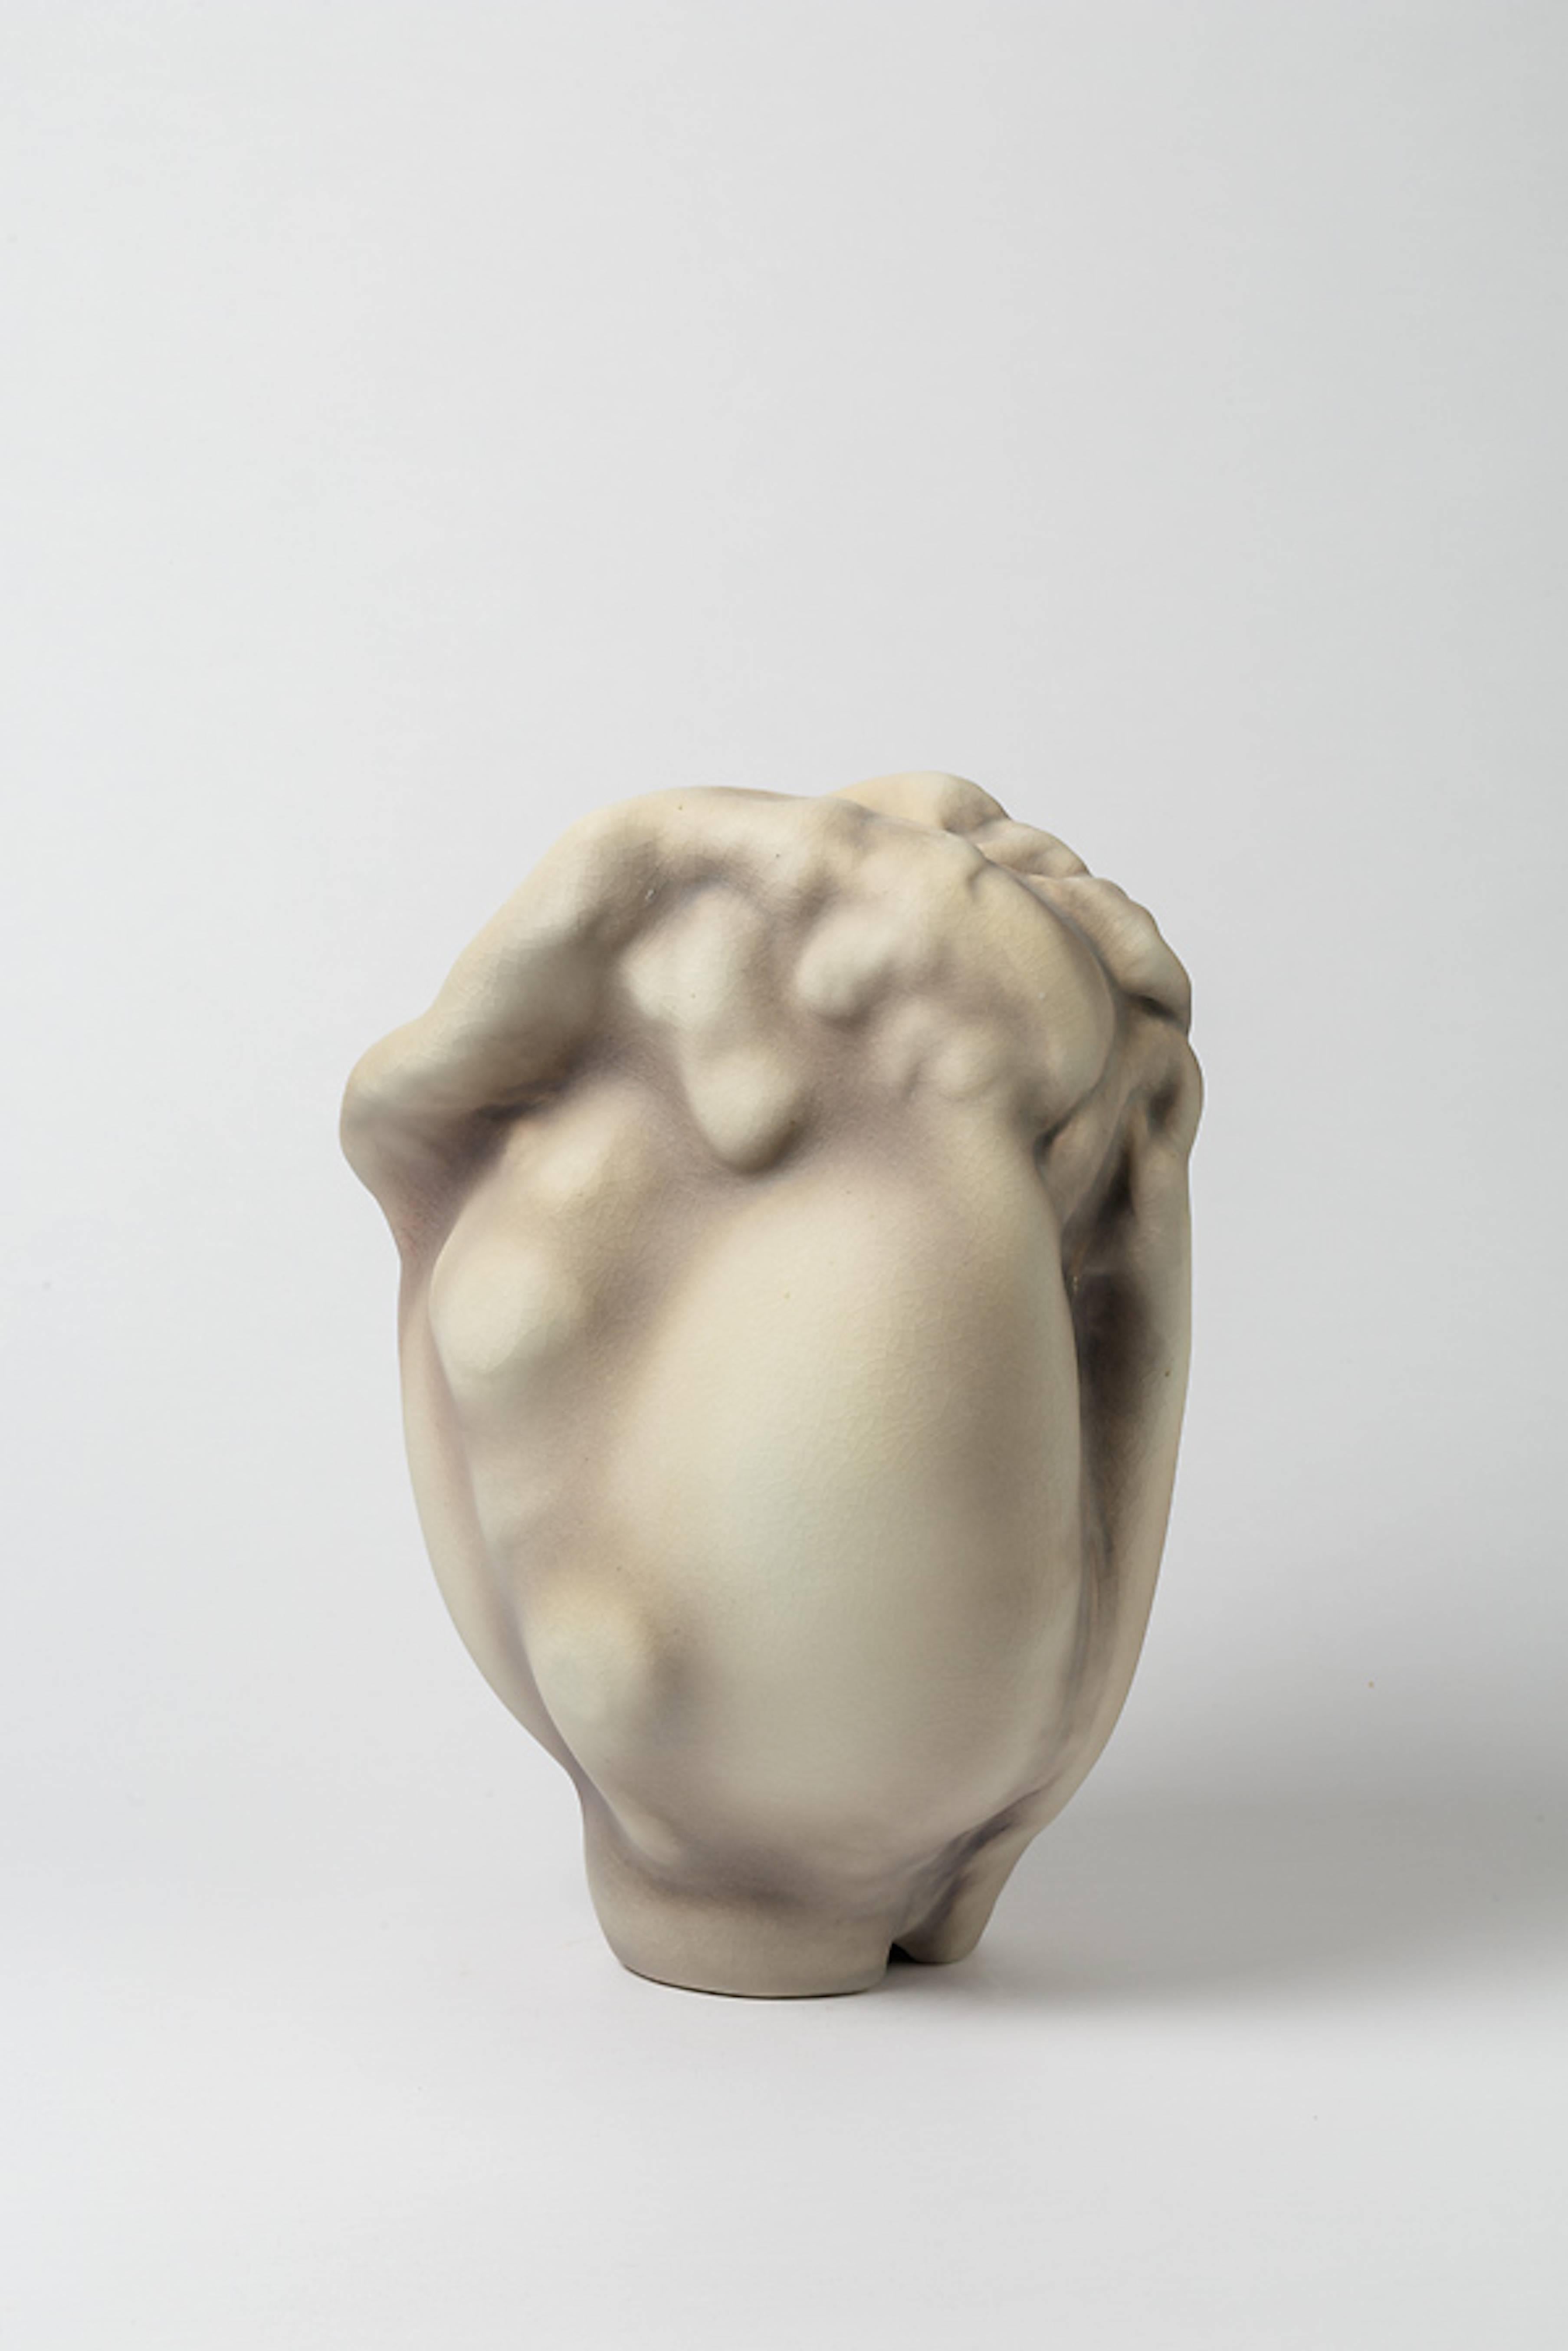 Beaux Arts Porcelain Sculpture by Wayne Fischer (French-American), circa 2016